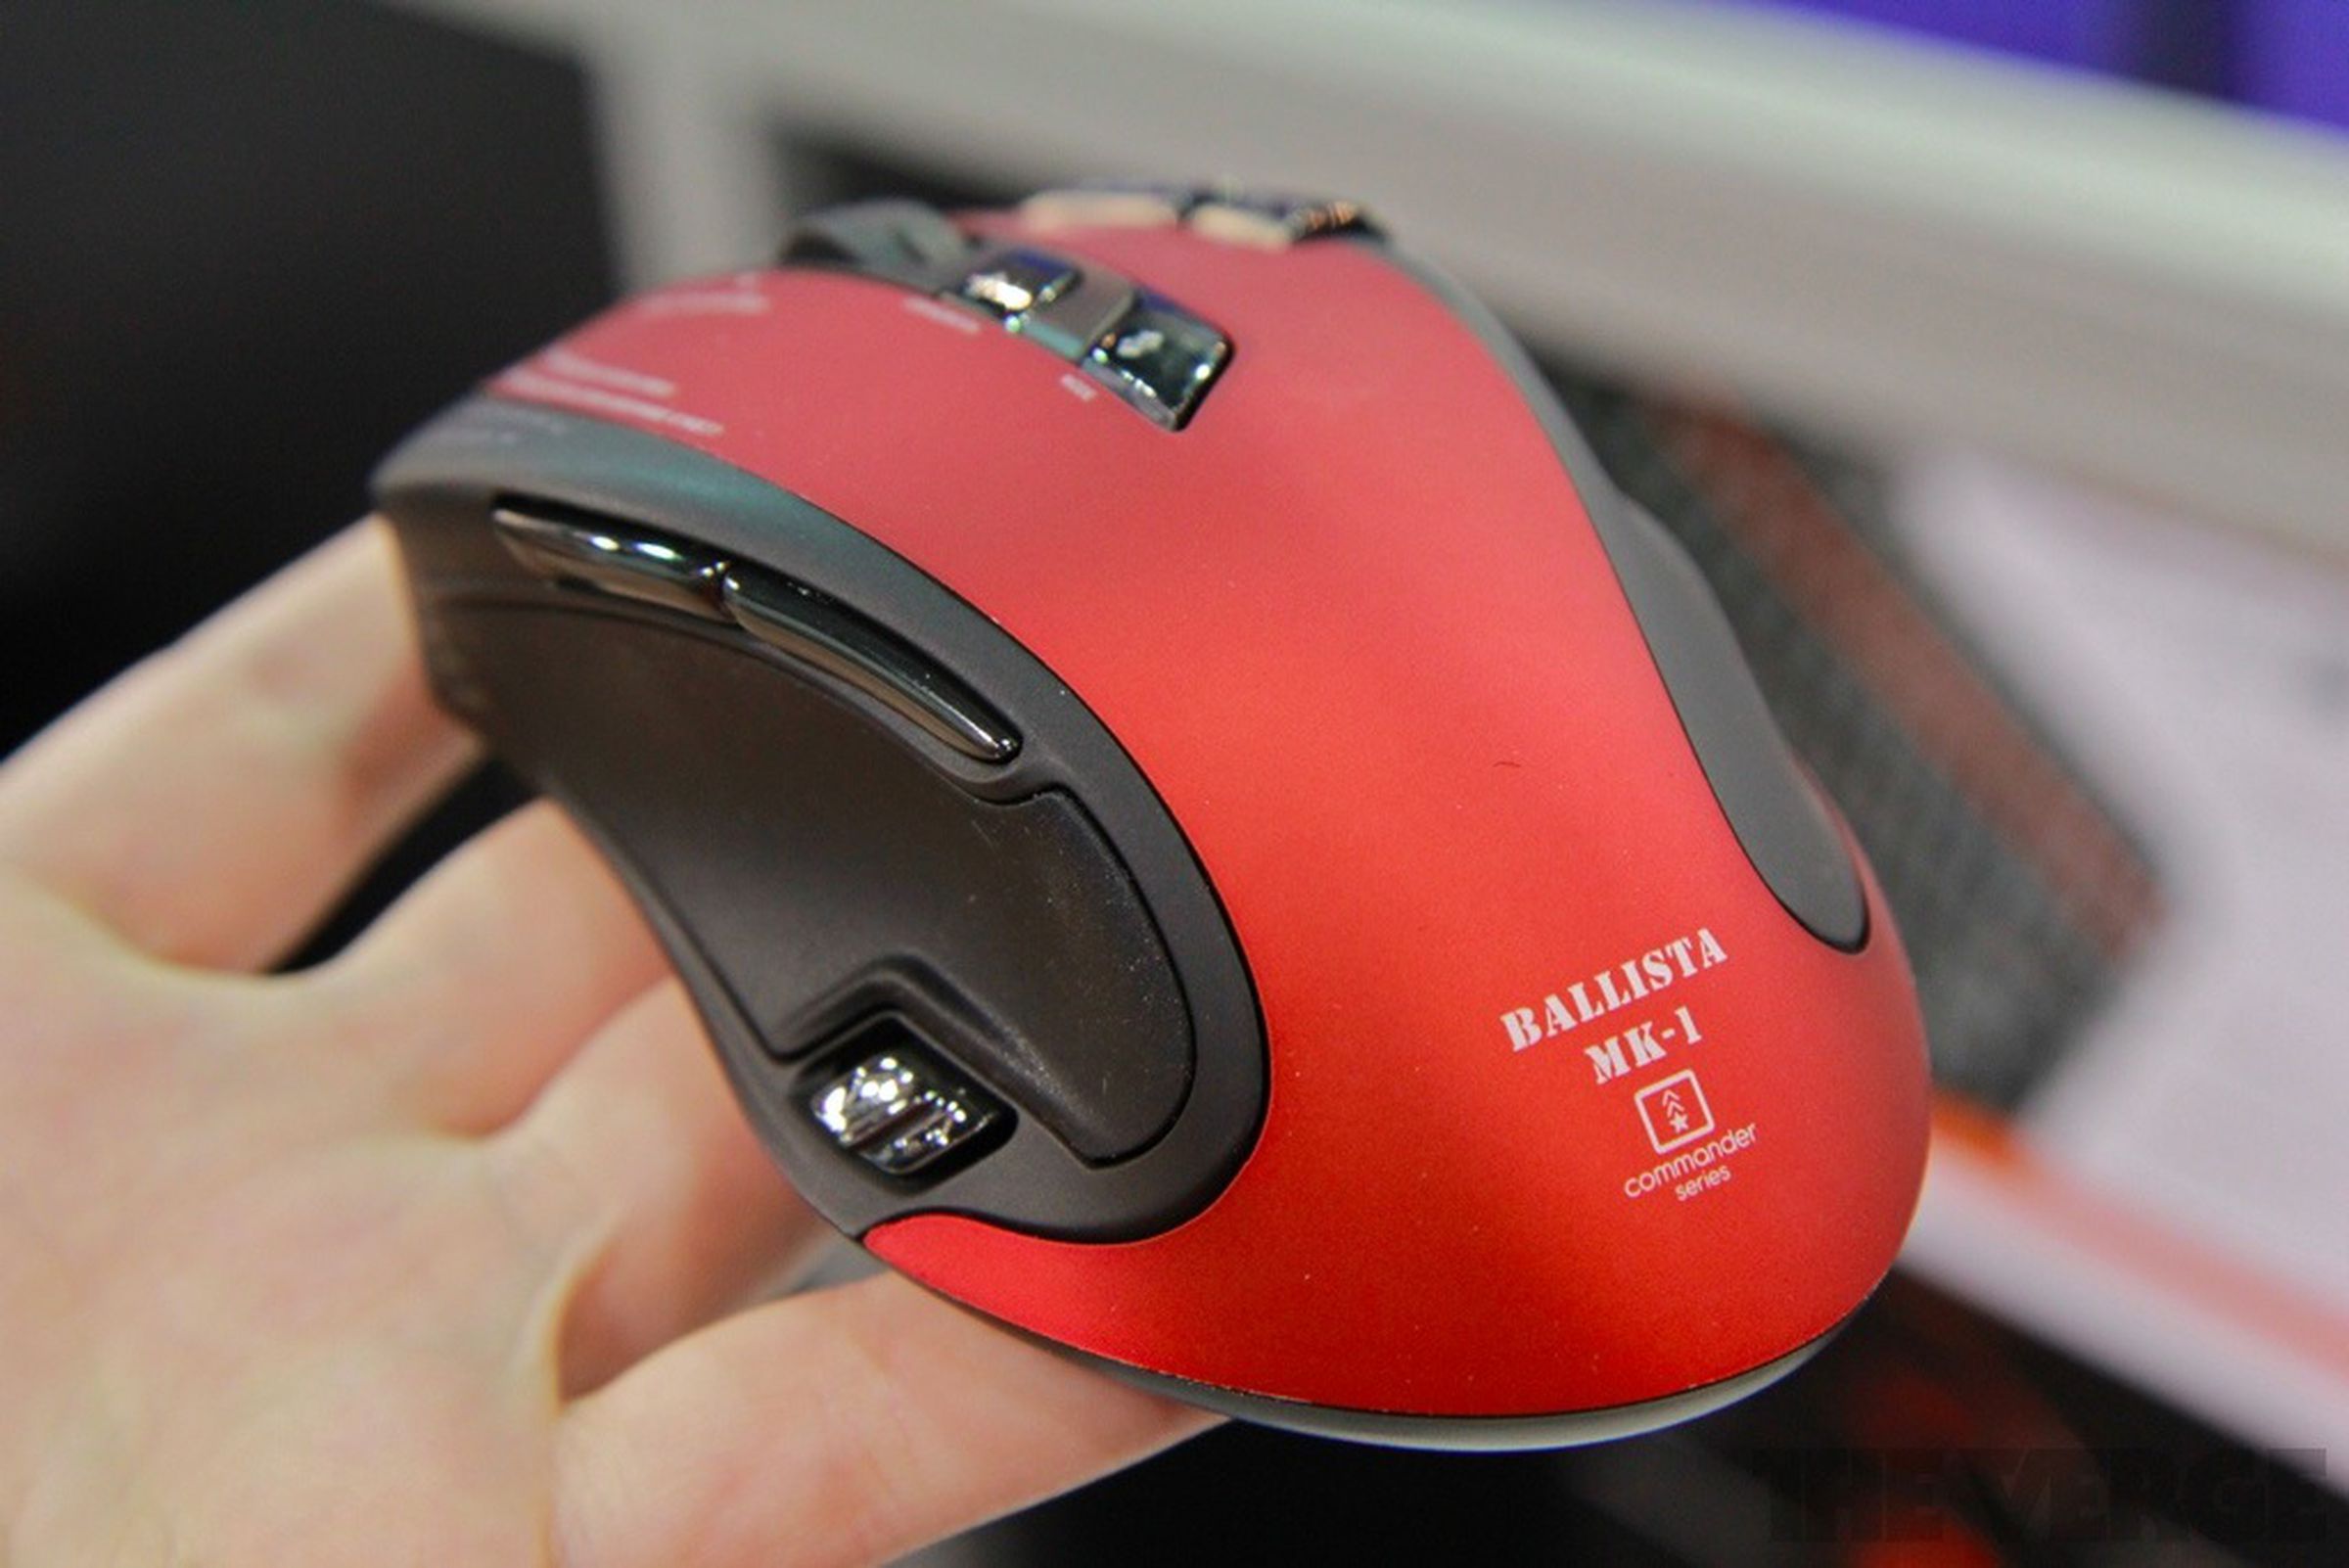 Shogun Bros. Ballista MK-1 gaming mouse hands-on pictures